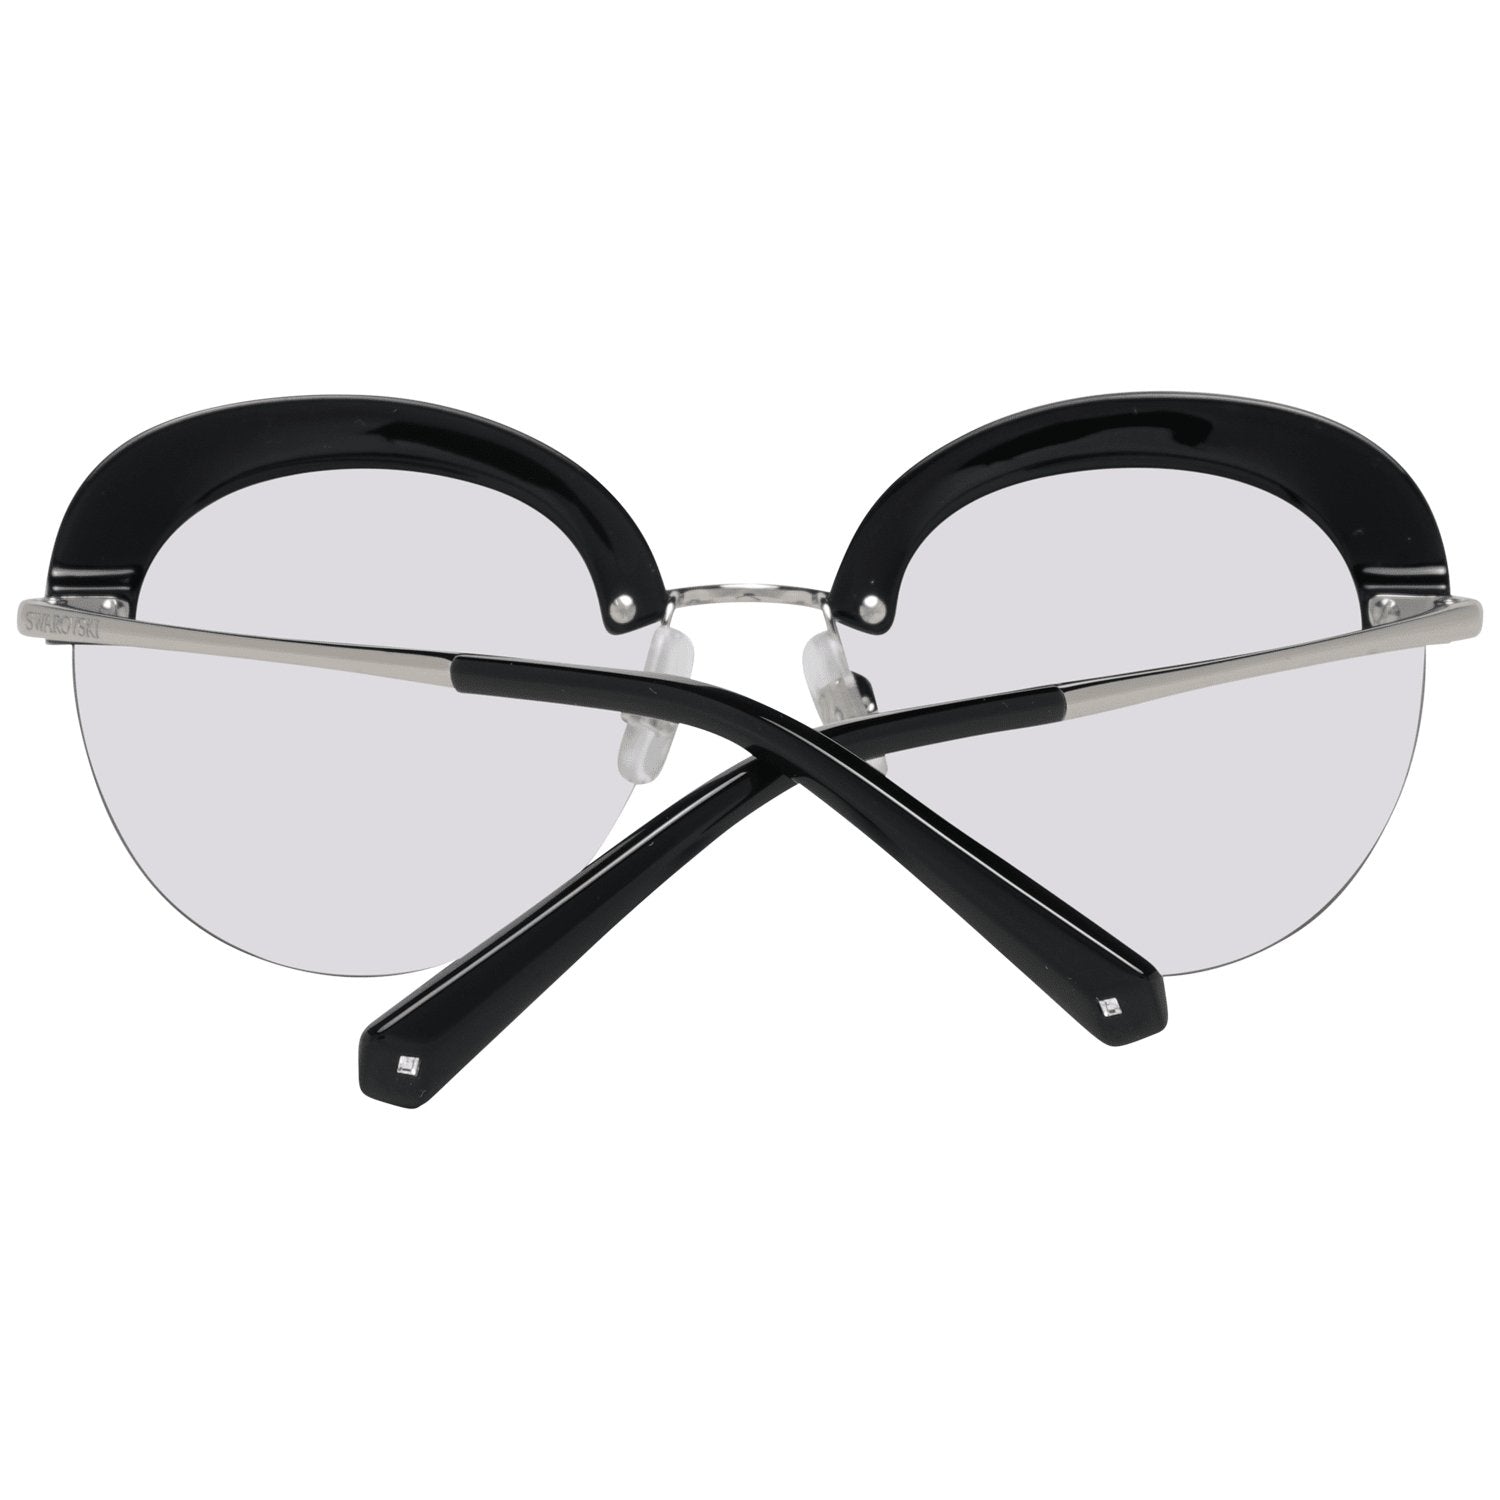 Swarovski Silver Sunglasses for Woman - Fizigo